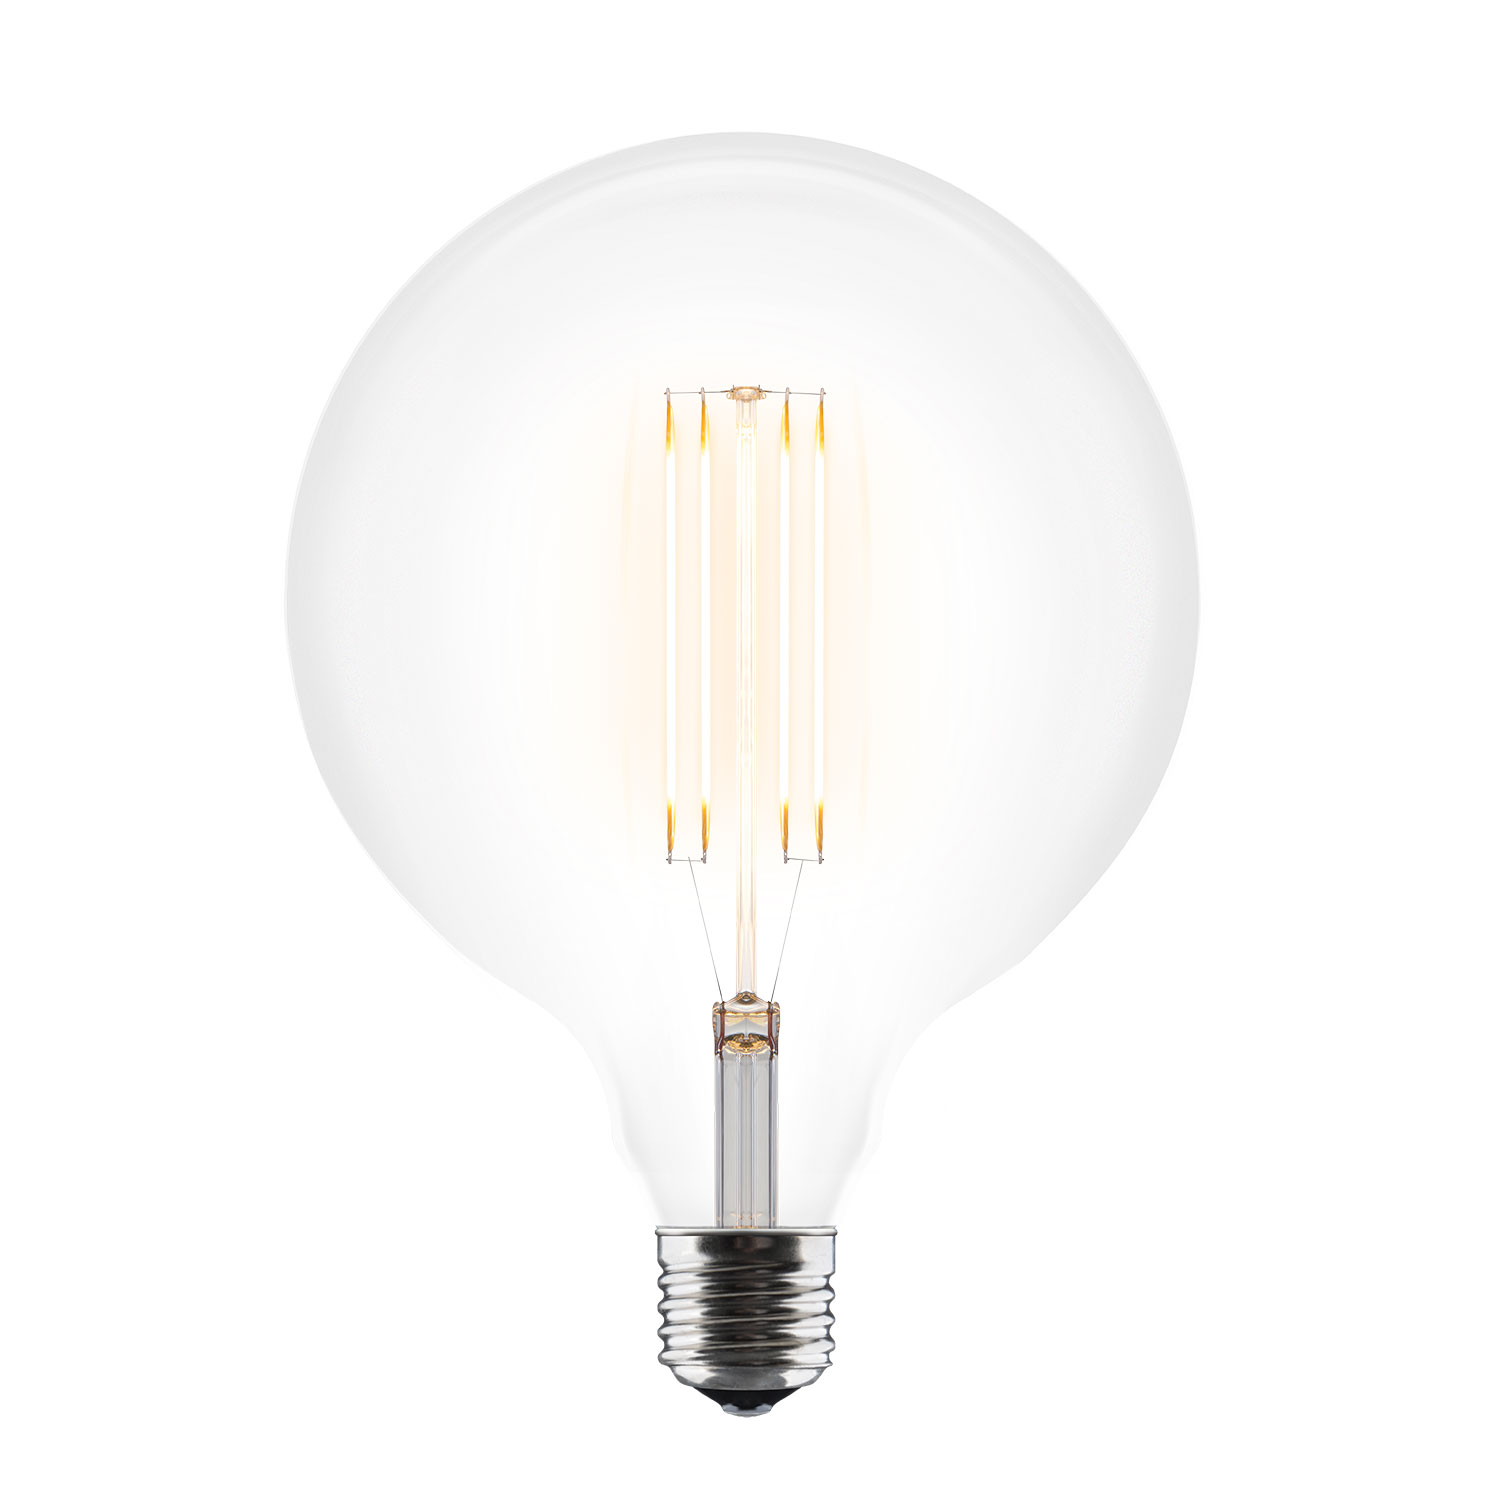 raket Negen Dalset Idea Light Bulb E27 LED 3W, 125 mm - Umage @ RoyalDesign